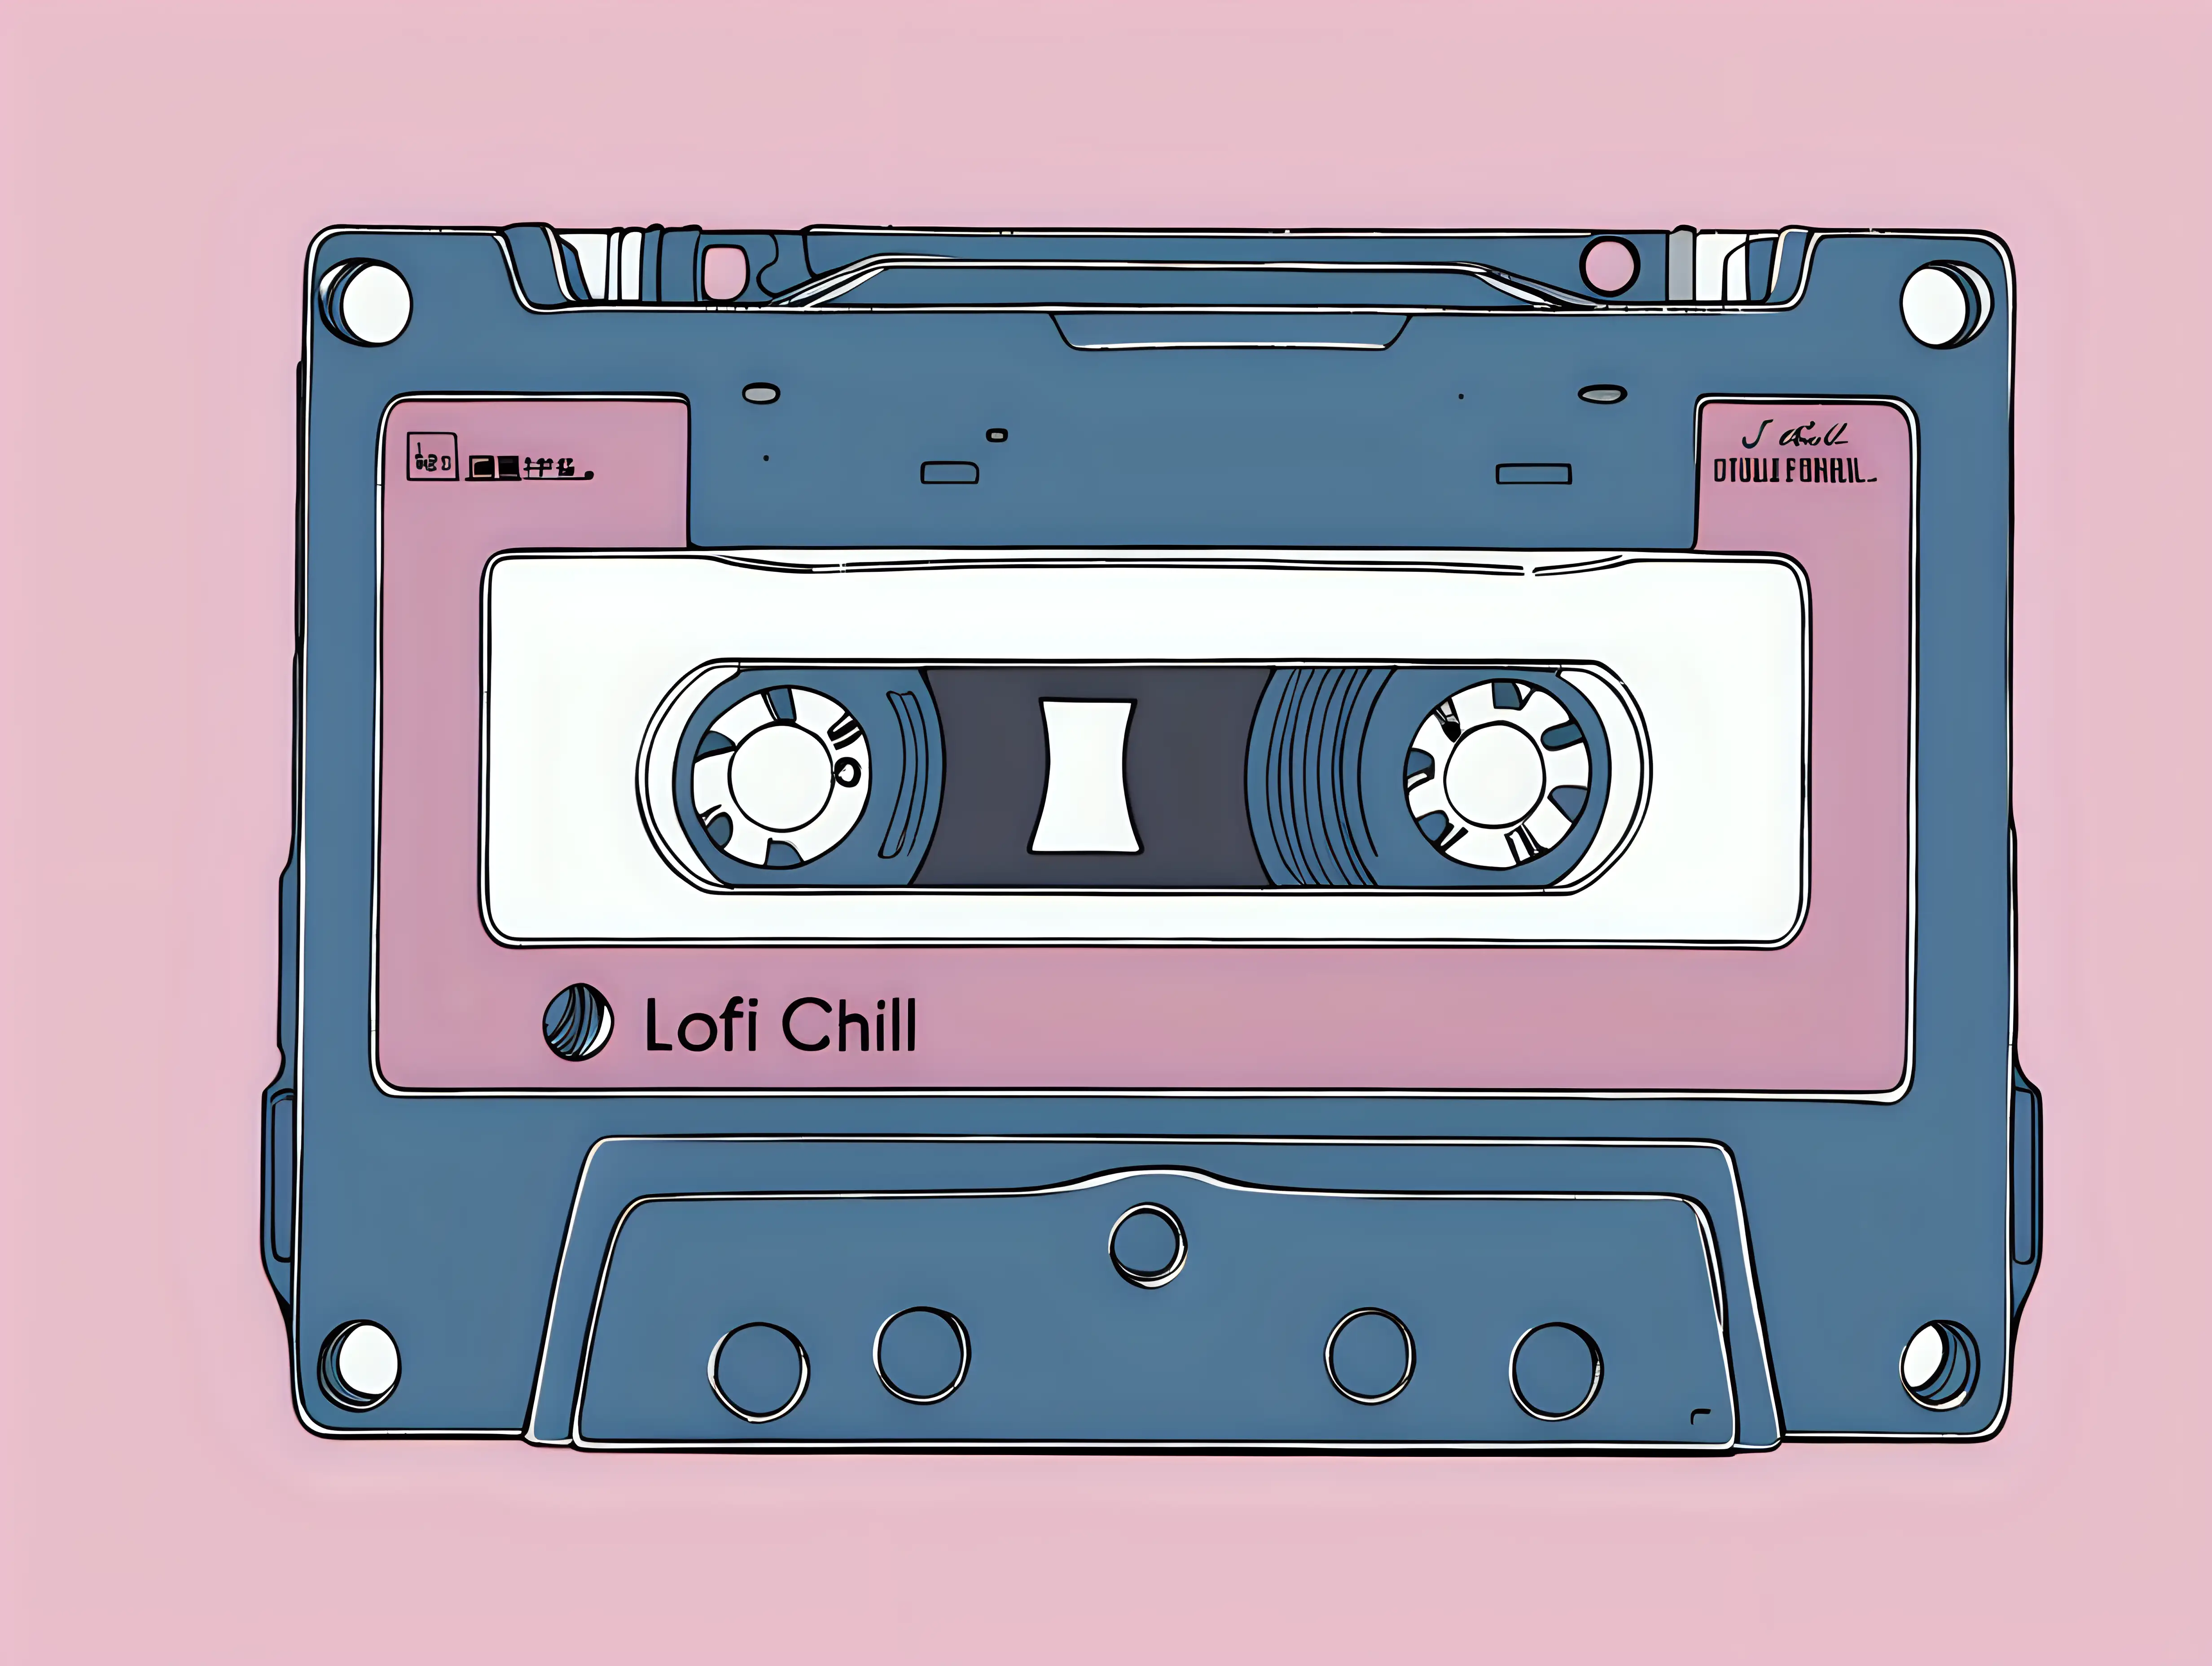 Relaxing Lofi Chill Music A Single Cassette Tape on a Retro Desk